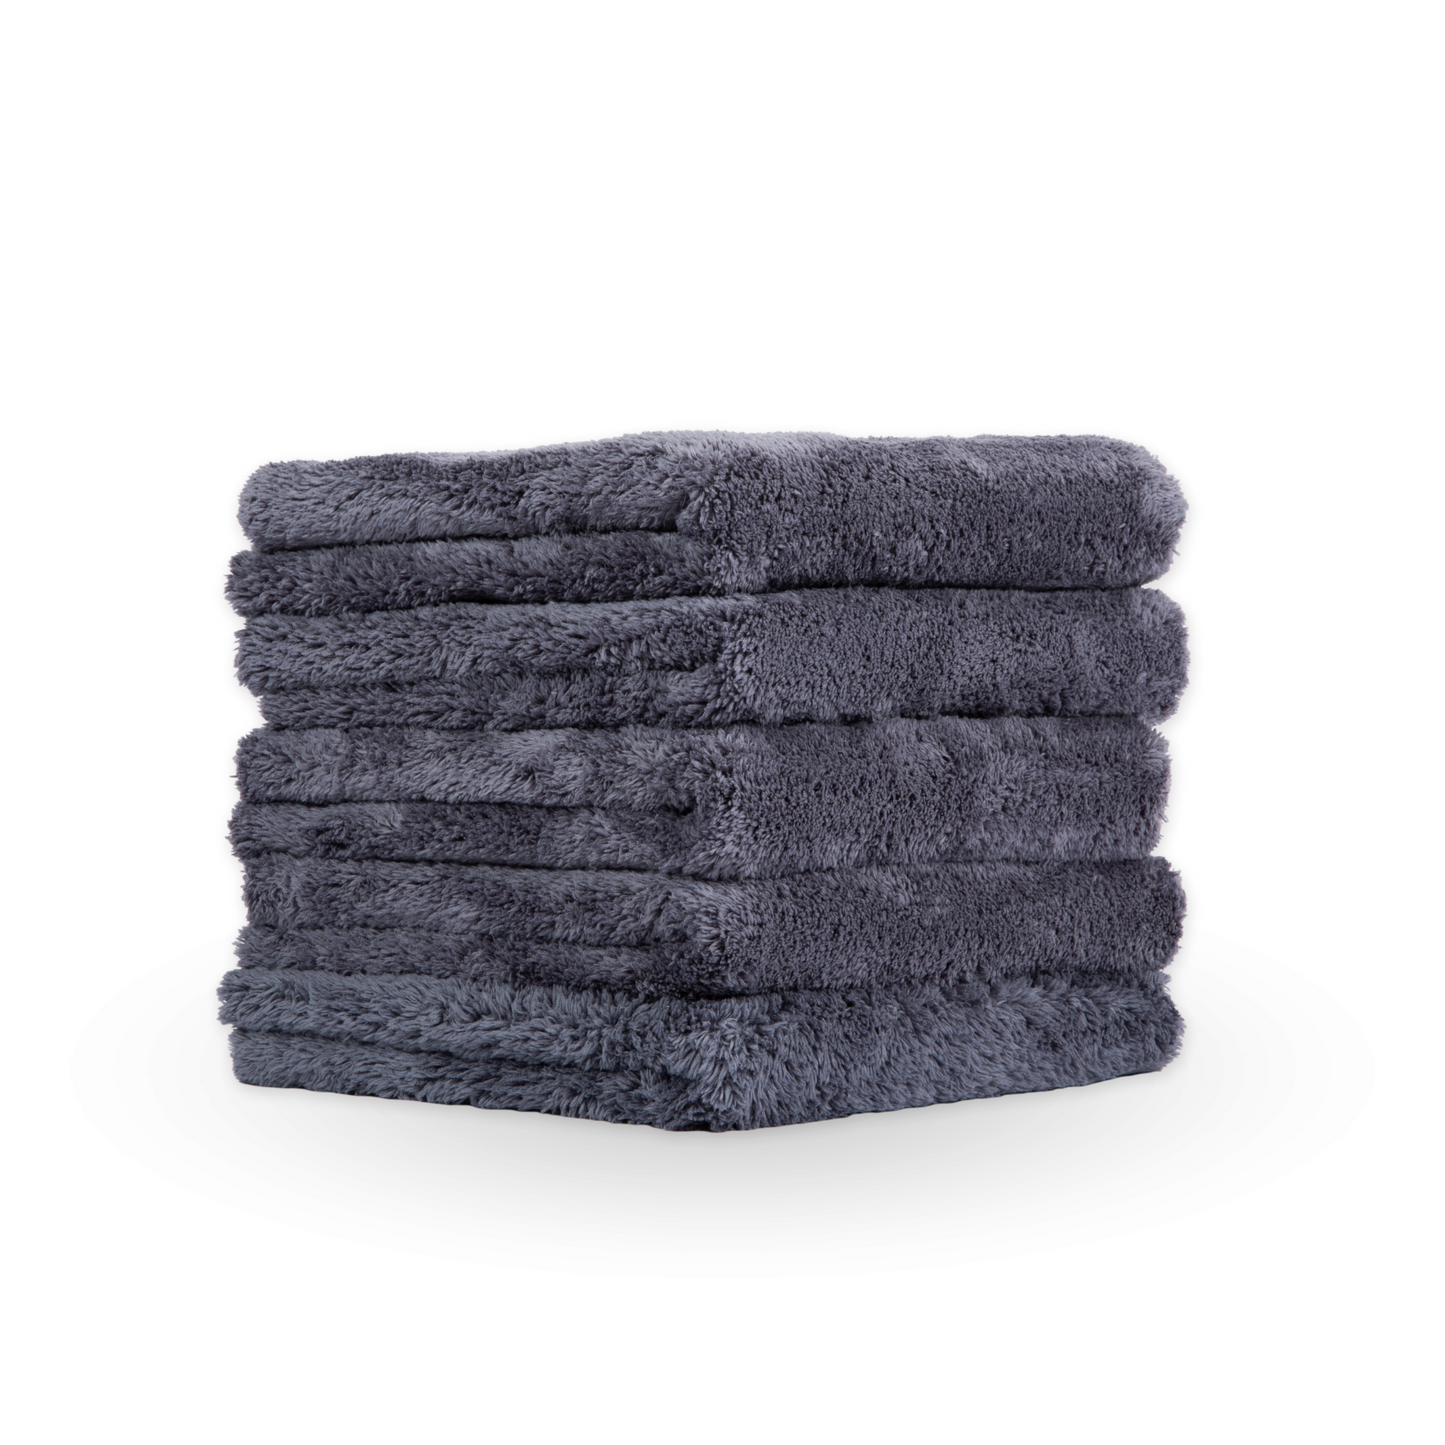 Plush Edgeless Detailing Towel - 5 Pack